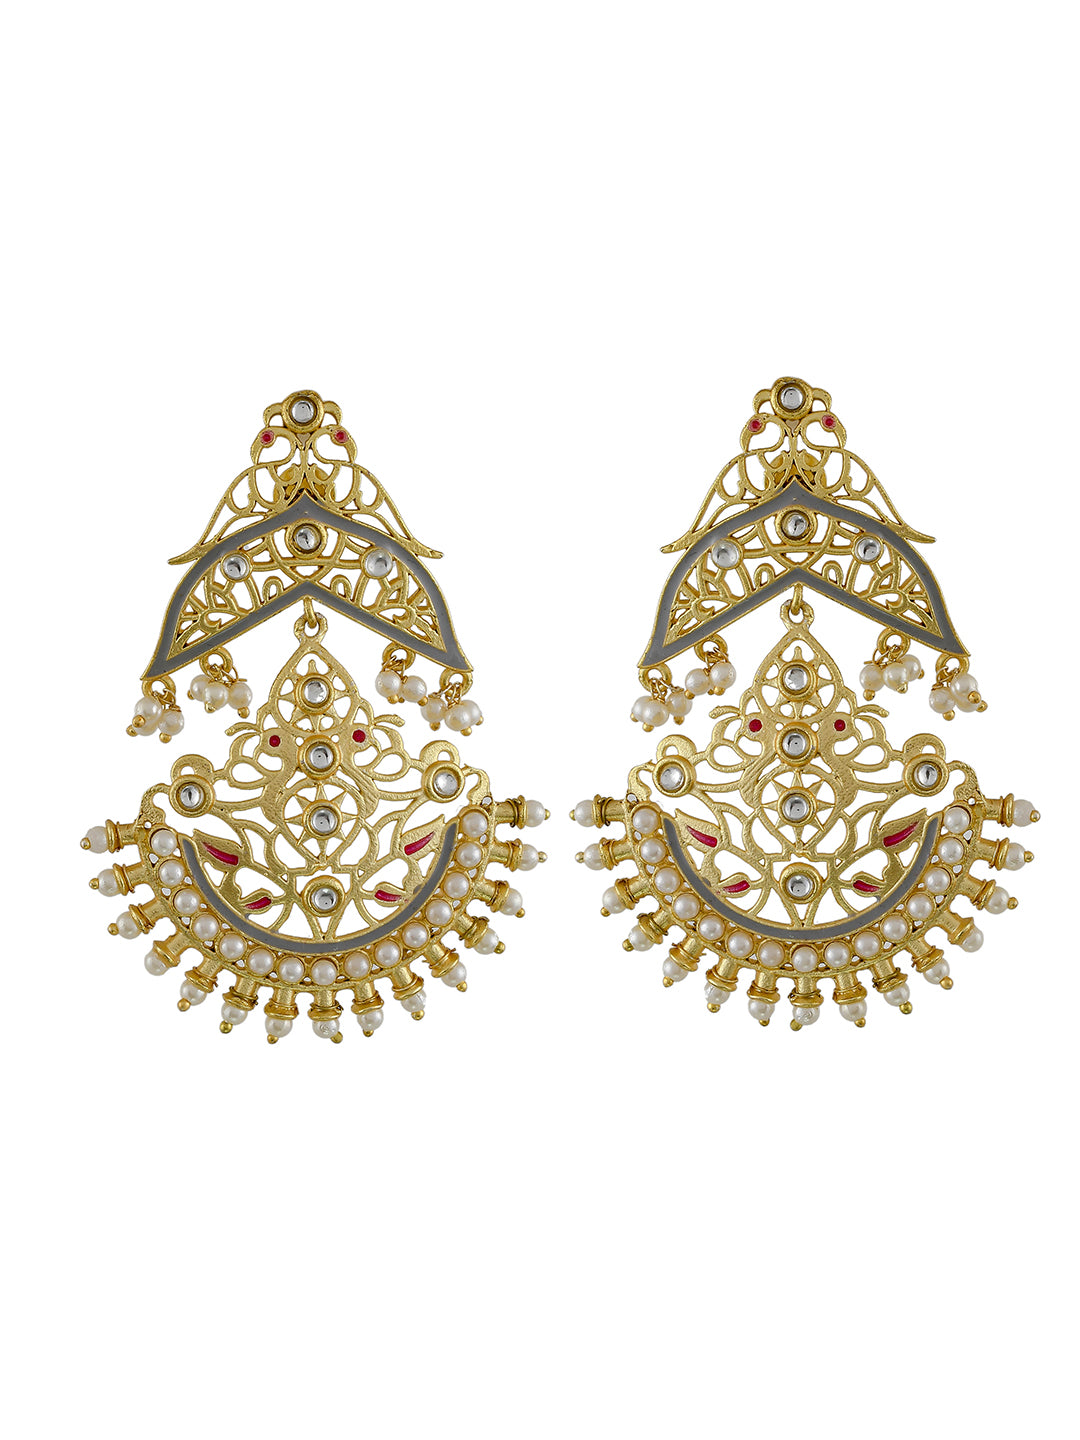 Gold Plated Filigree Chaandbali Earrings For Women